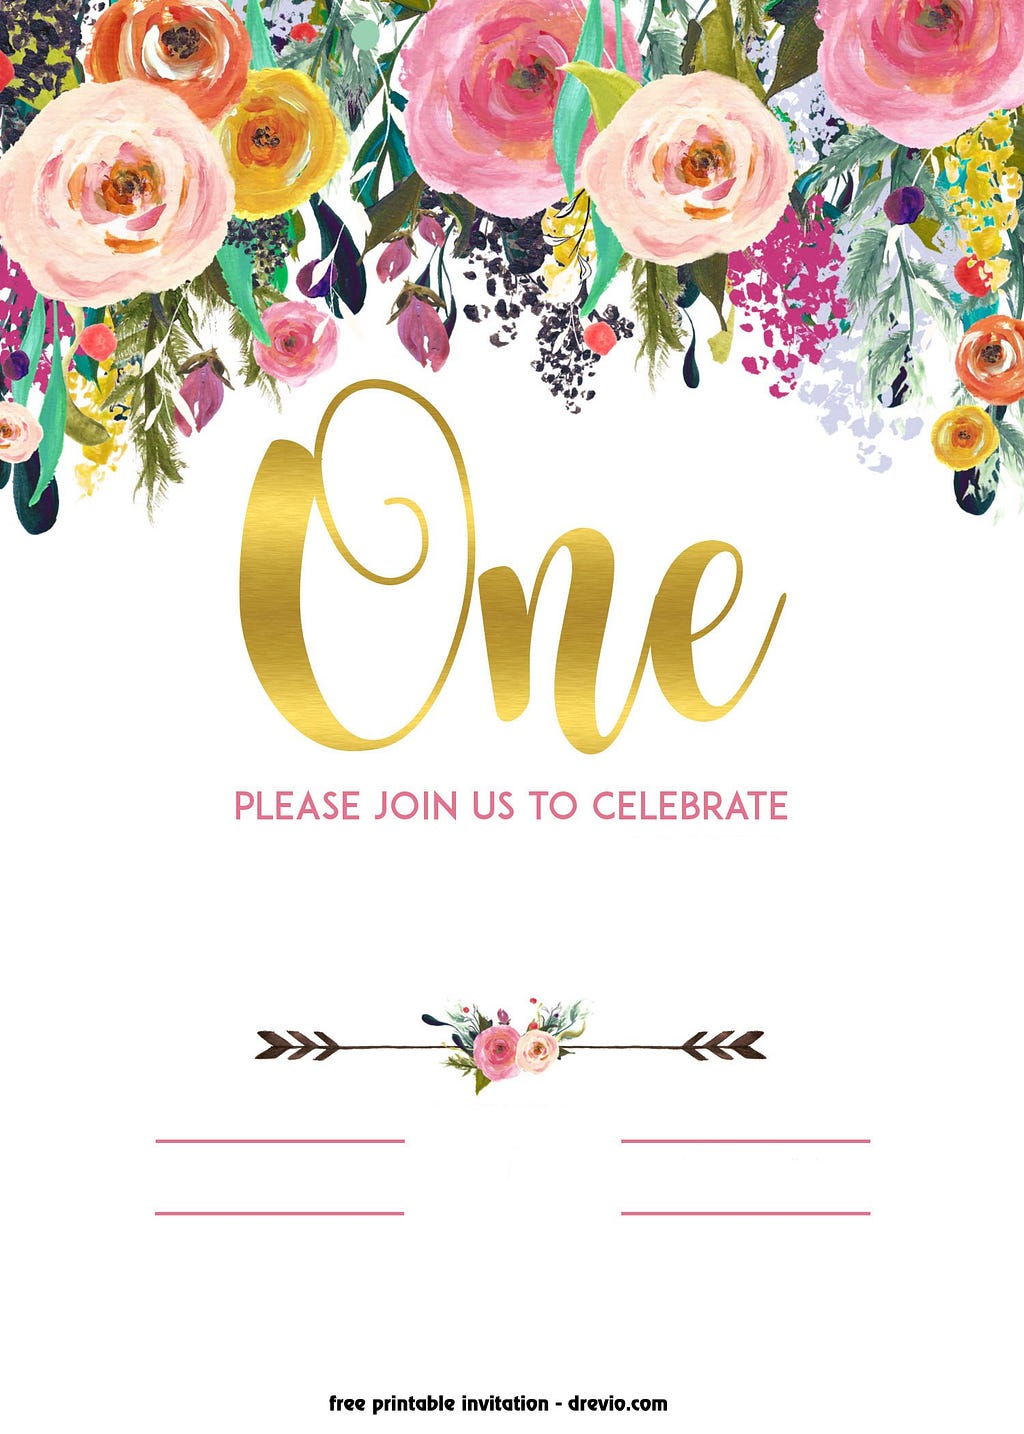 FREE Printable 1st Birthday Invitation Vintage Style! FREE Invitation Templates Drevio